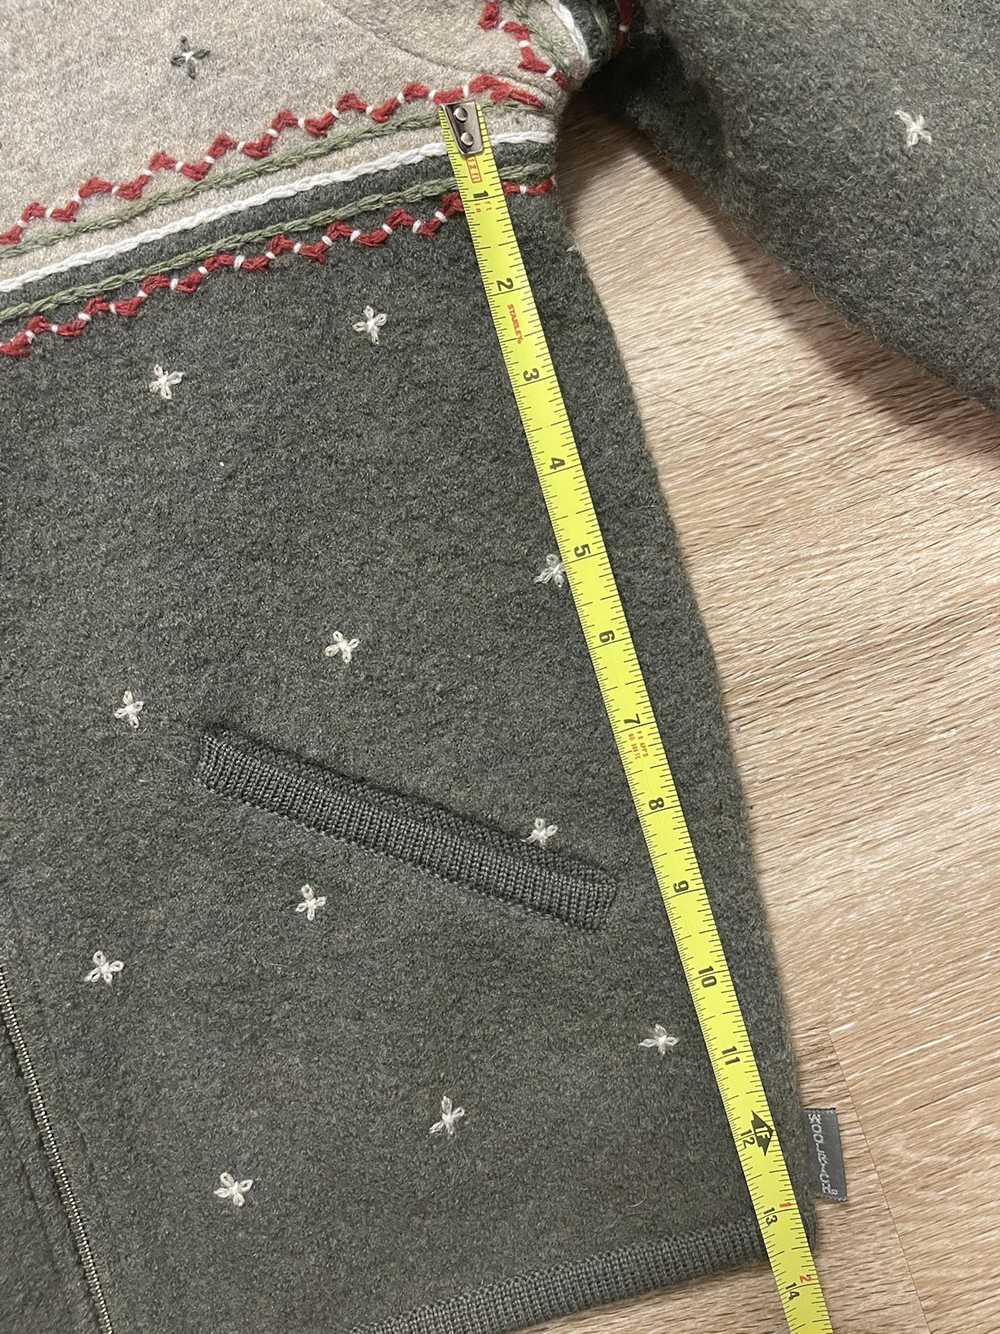 Vintage × Woolrich Woolen Mills Zip Up Jacket wit… - image 9